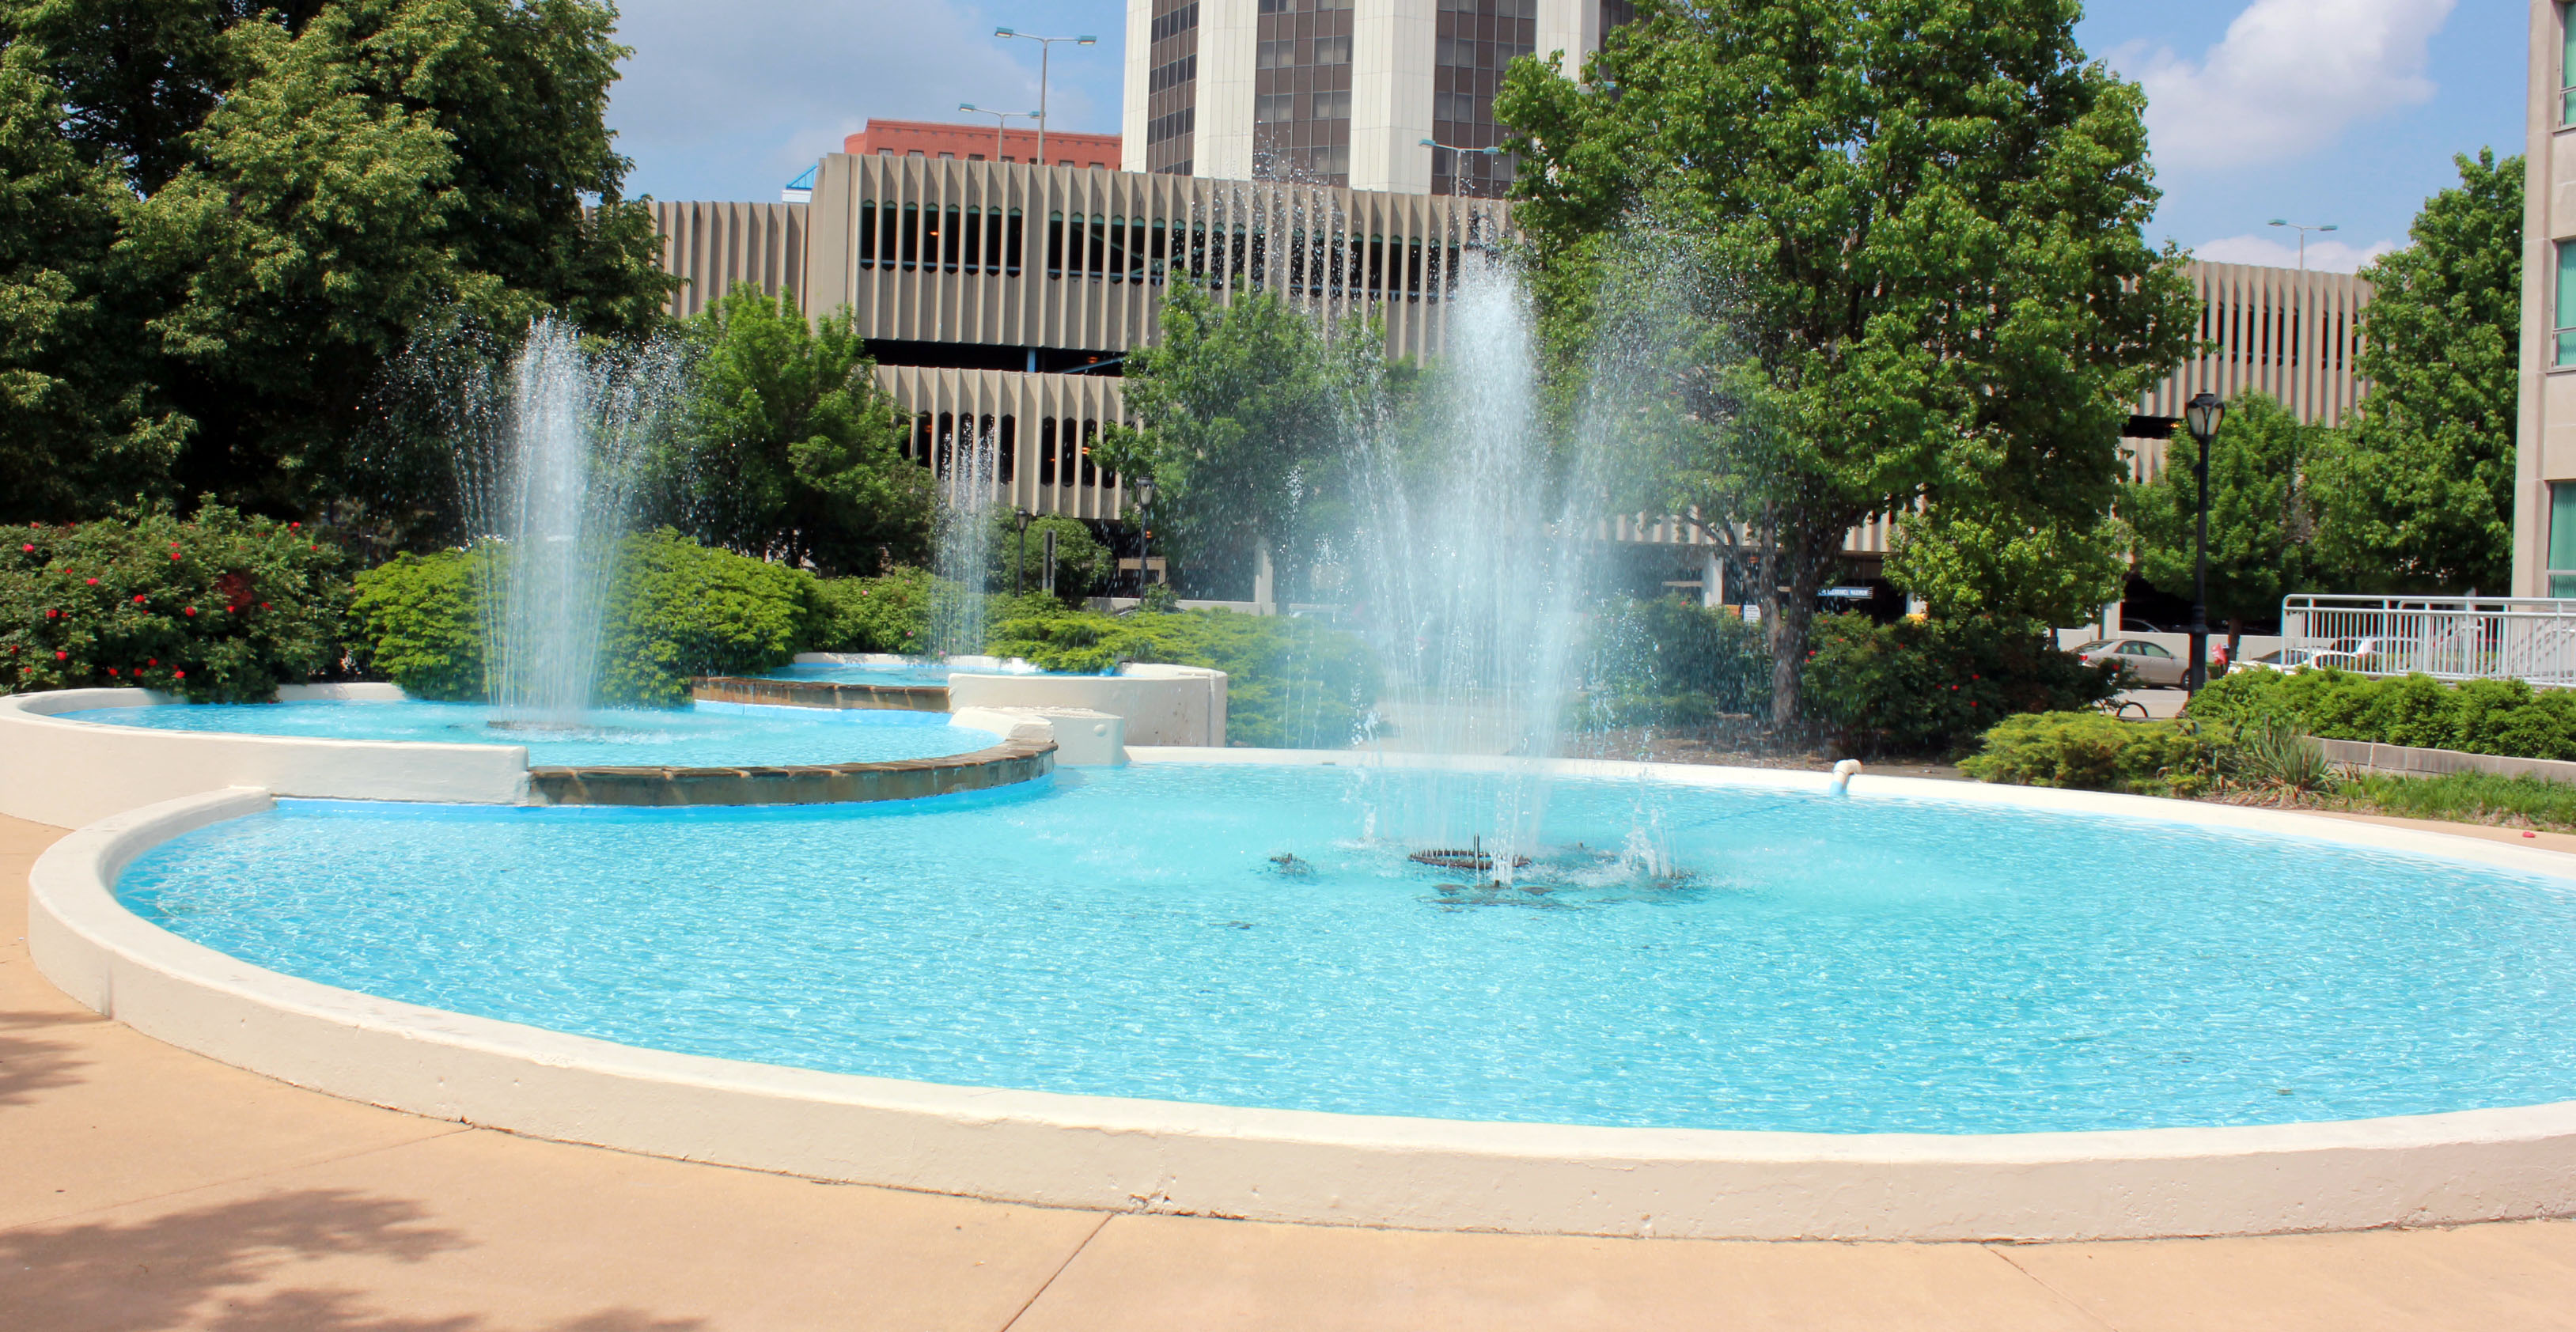 Water Fountain in Springfield, Illinois image - Free stock photo ...